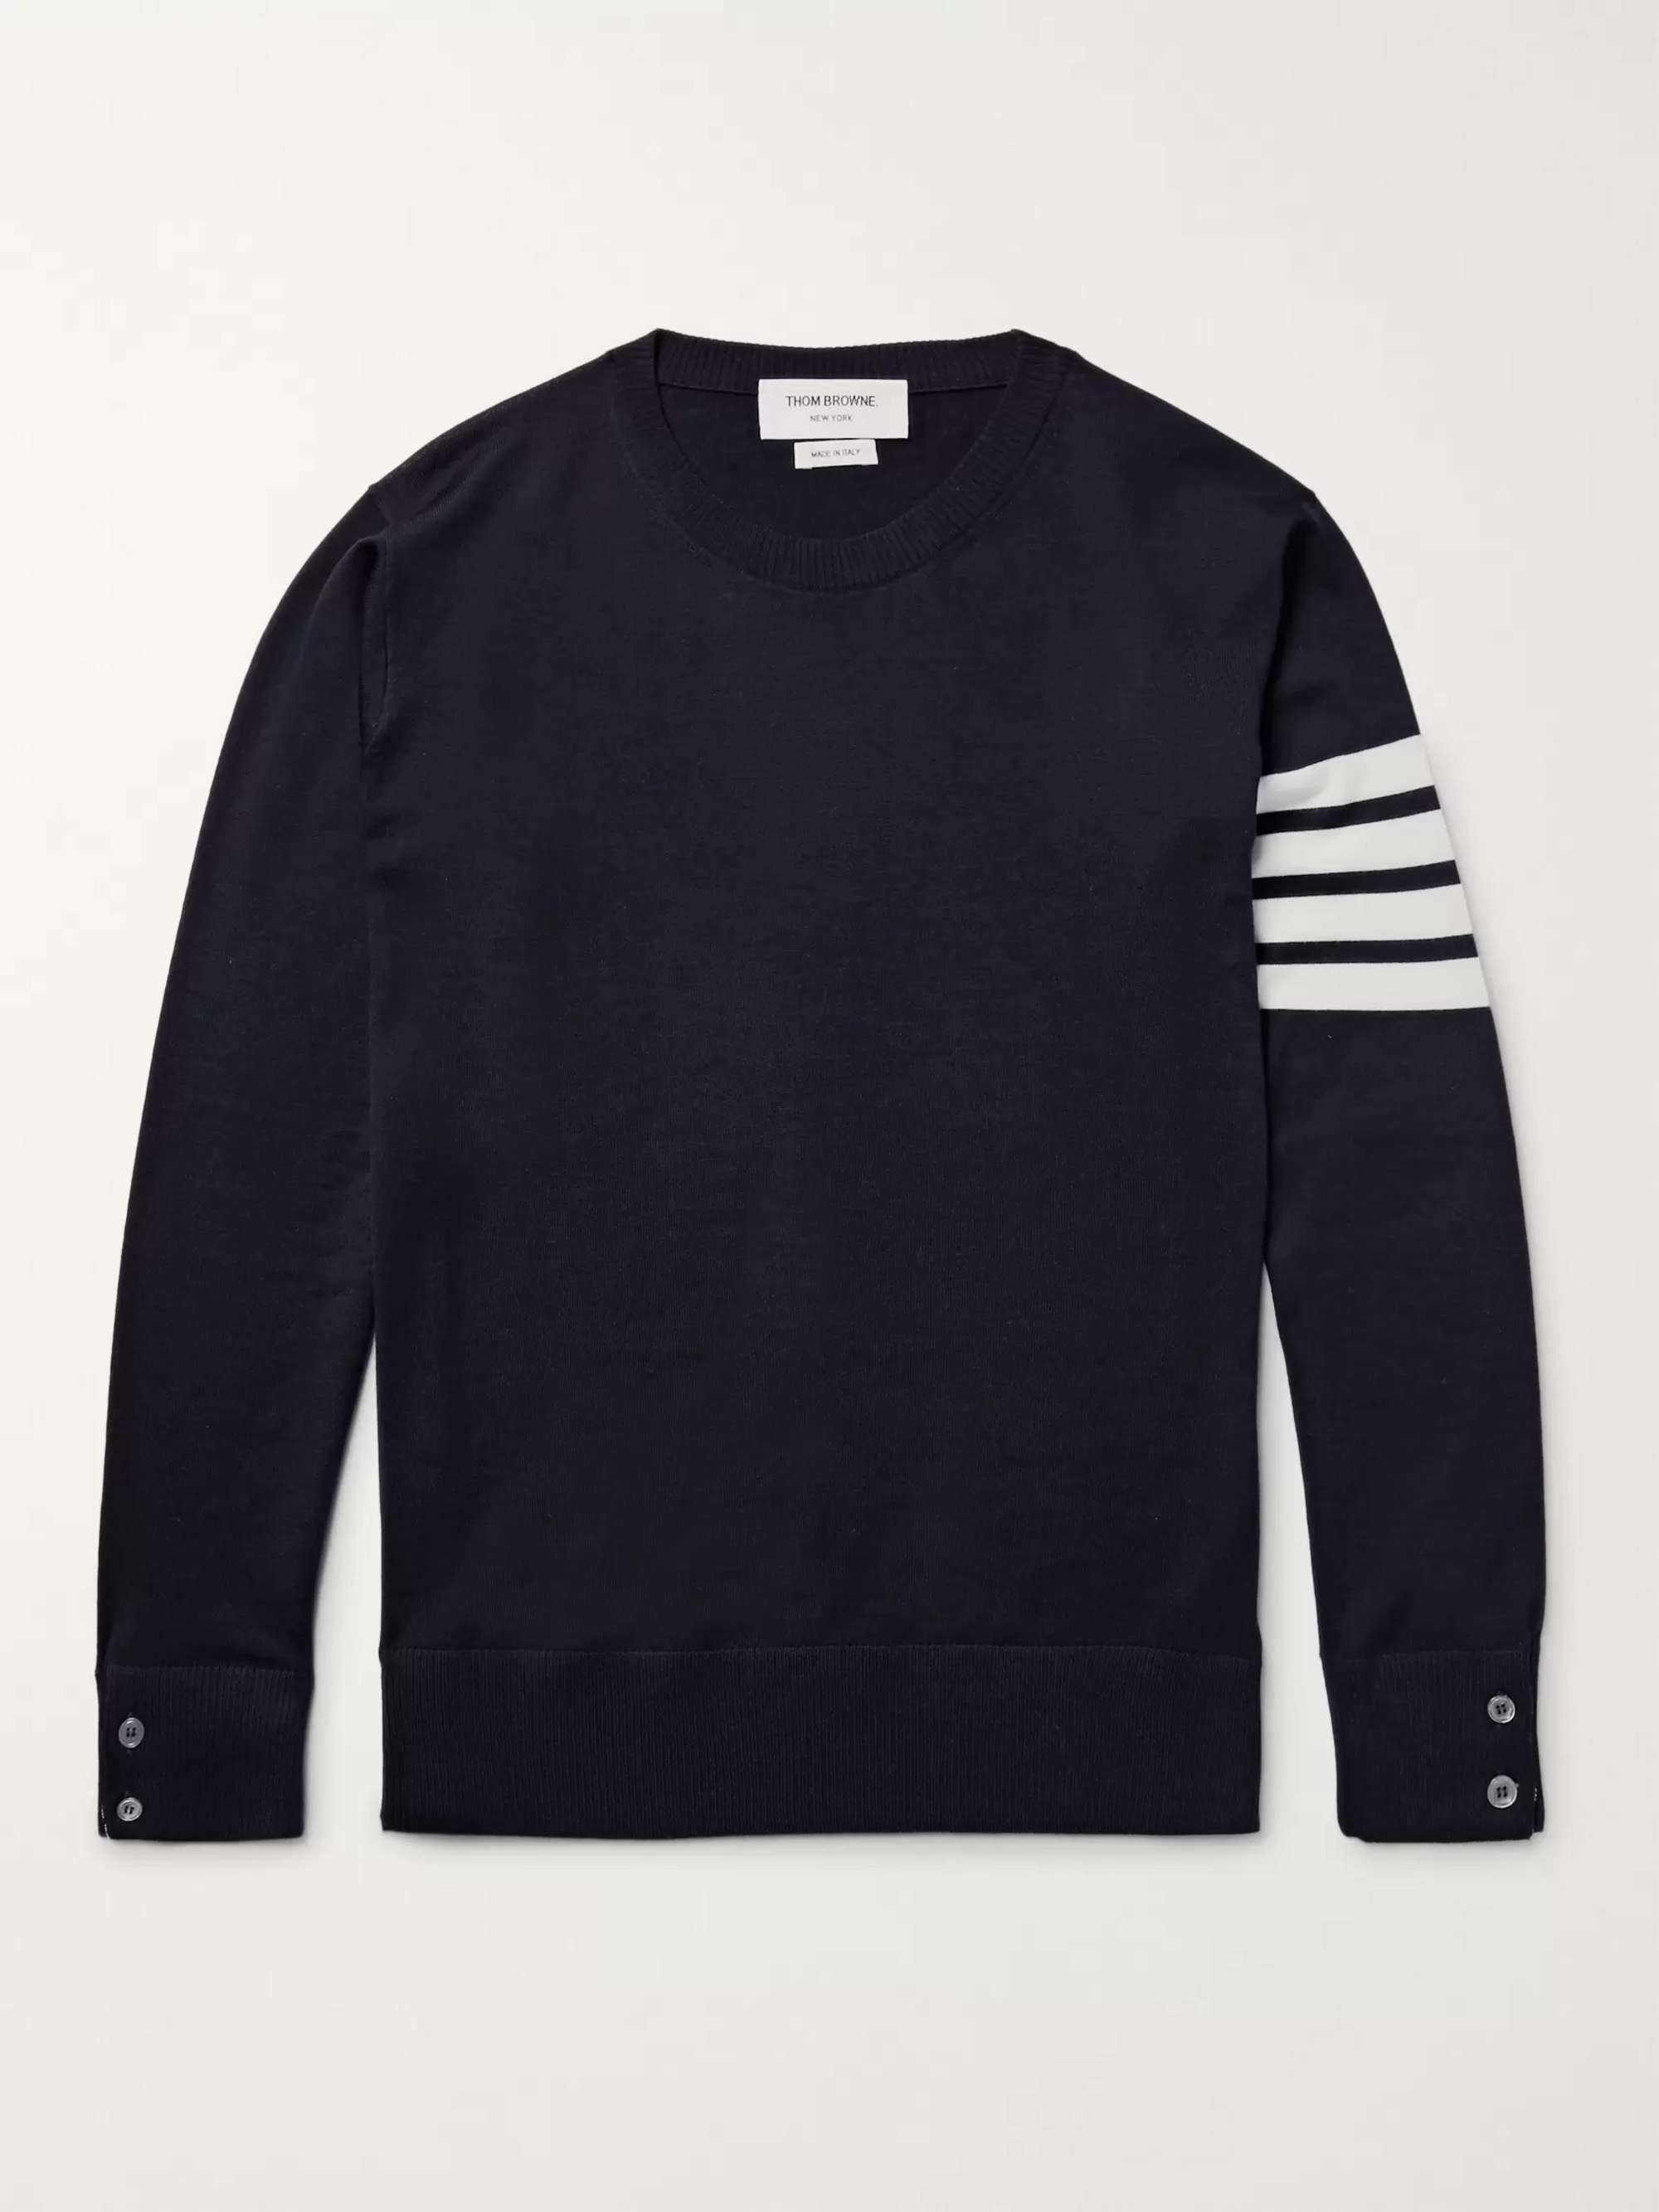 THOM BROWNE Striped Merino Wool Sweater for Men | MR PORTER